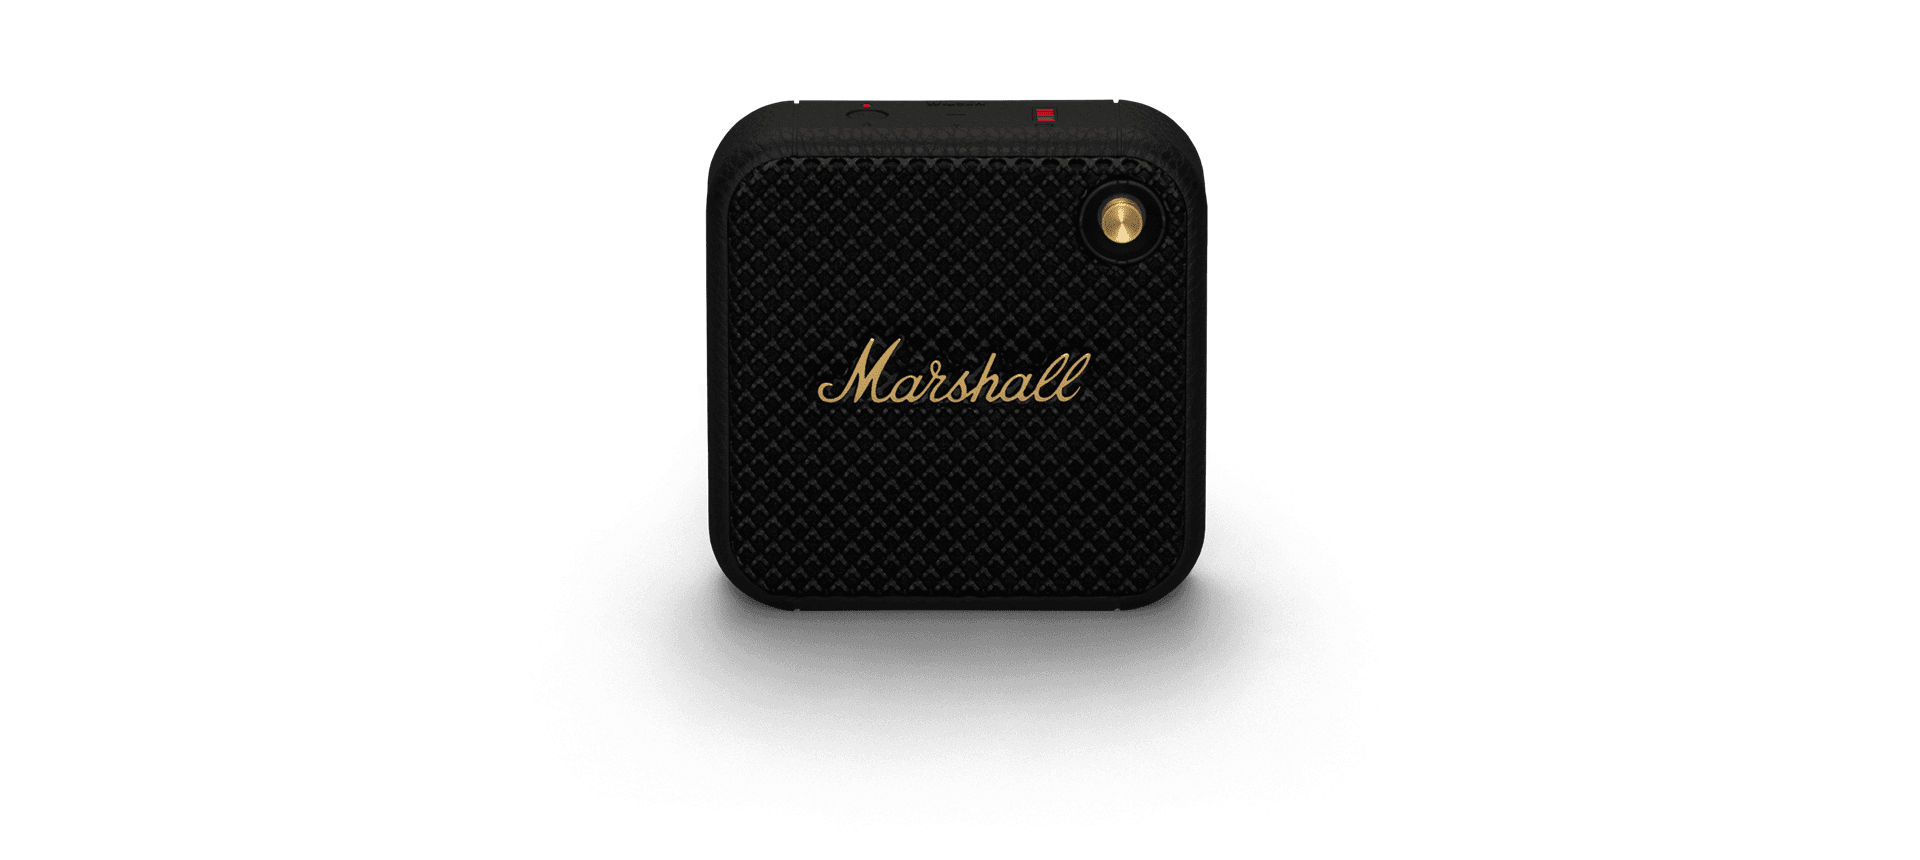 MARSHALL_WILLEN_1